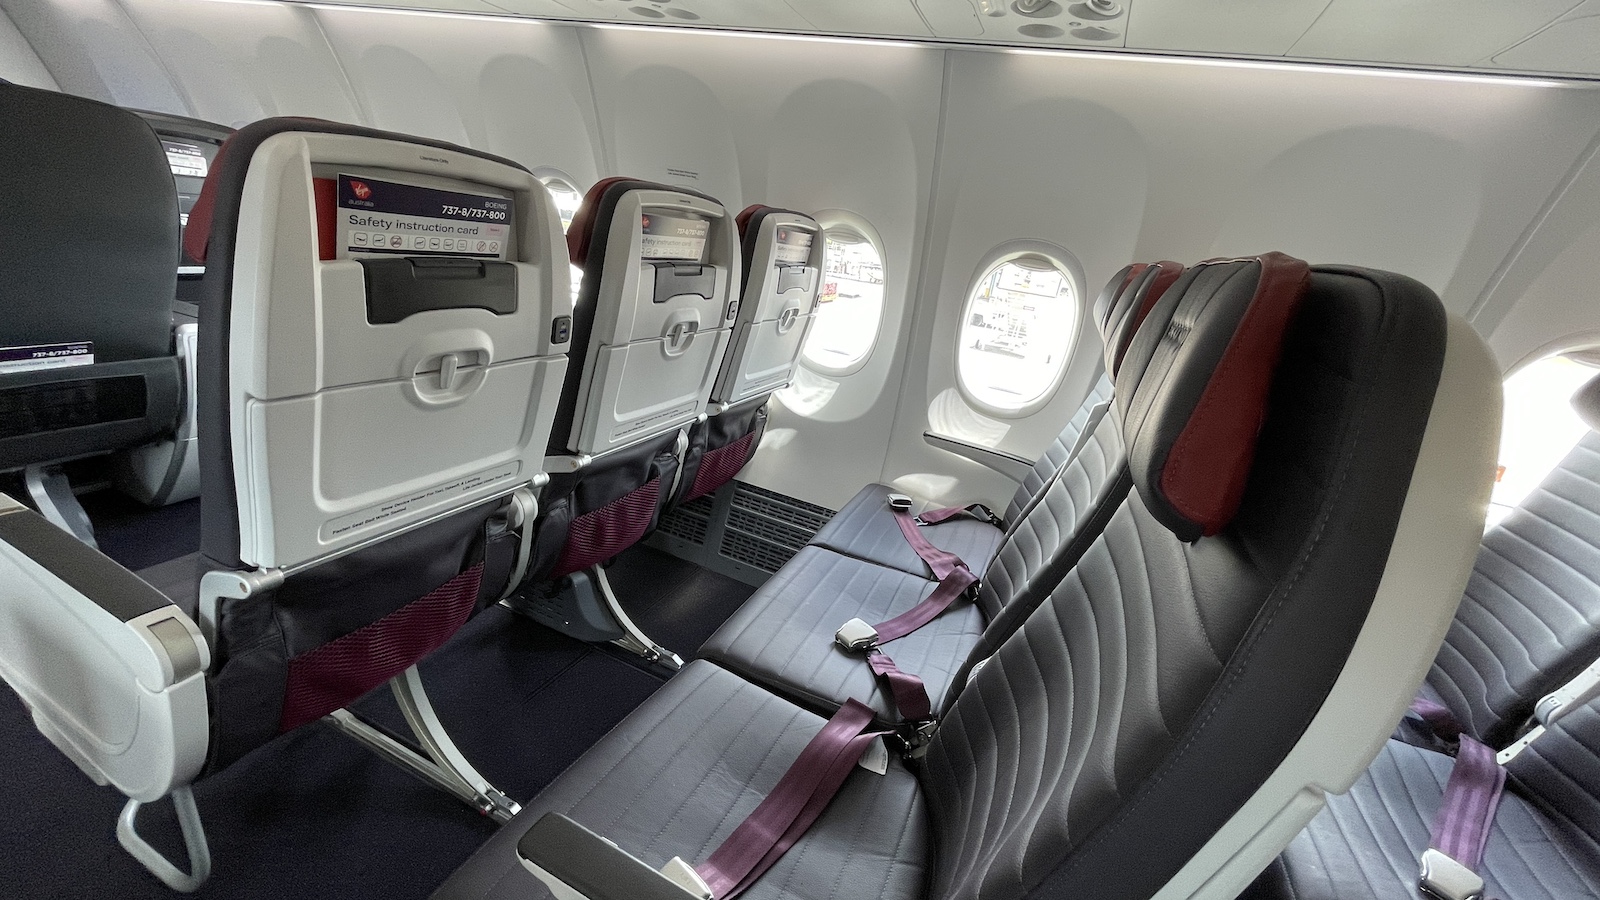 Virgin Australia Cairns Tokyo Haneda Economy X Seat Pitch